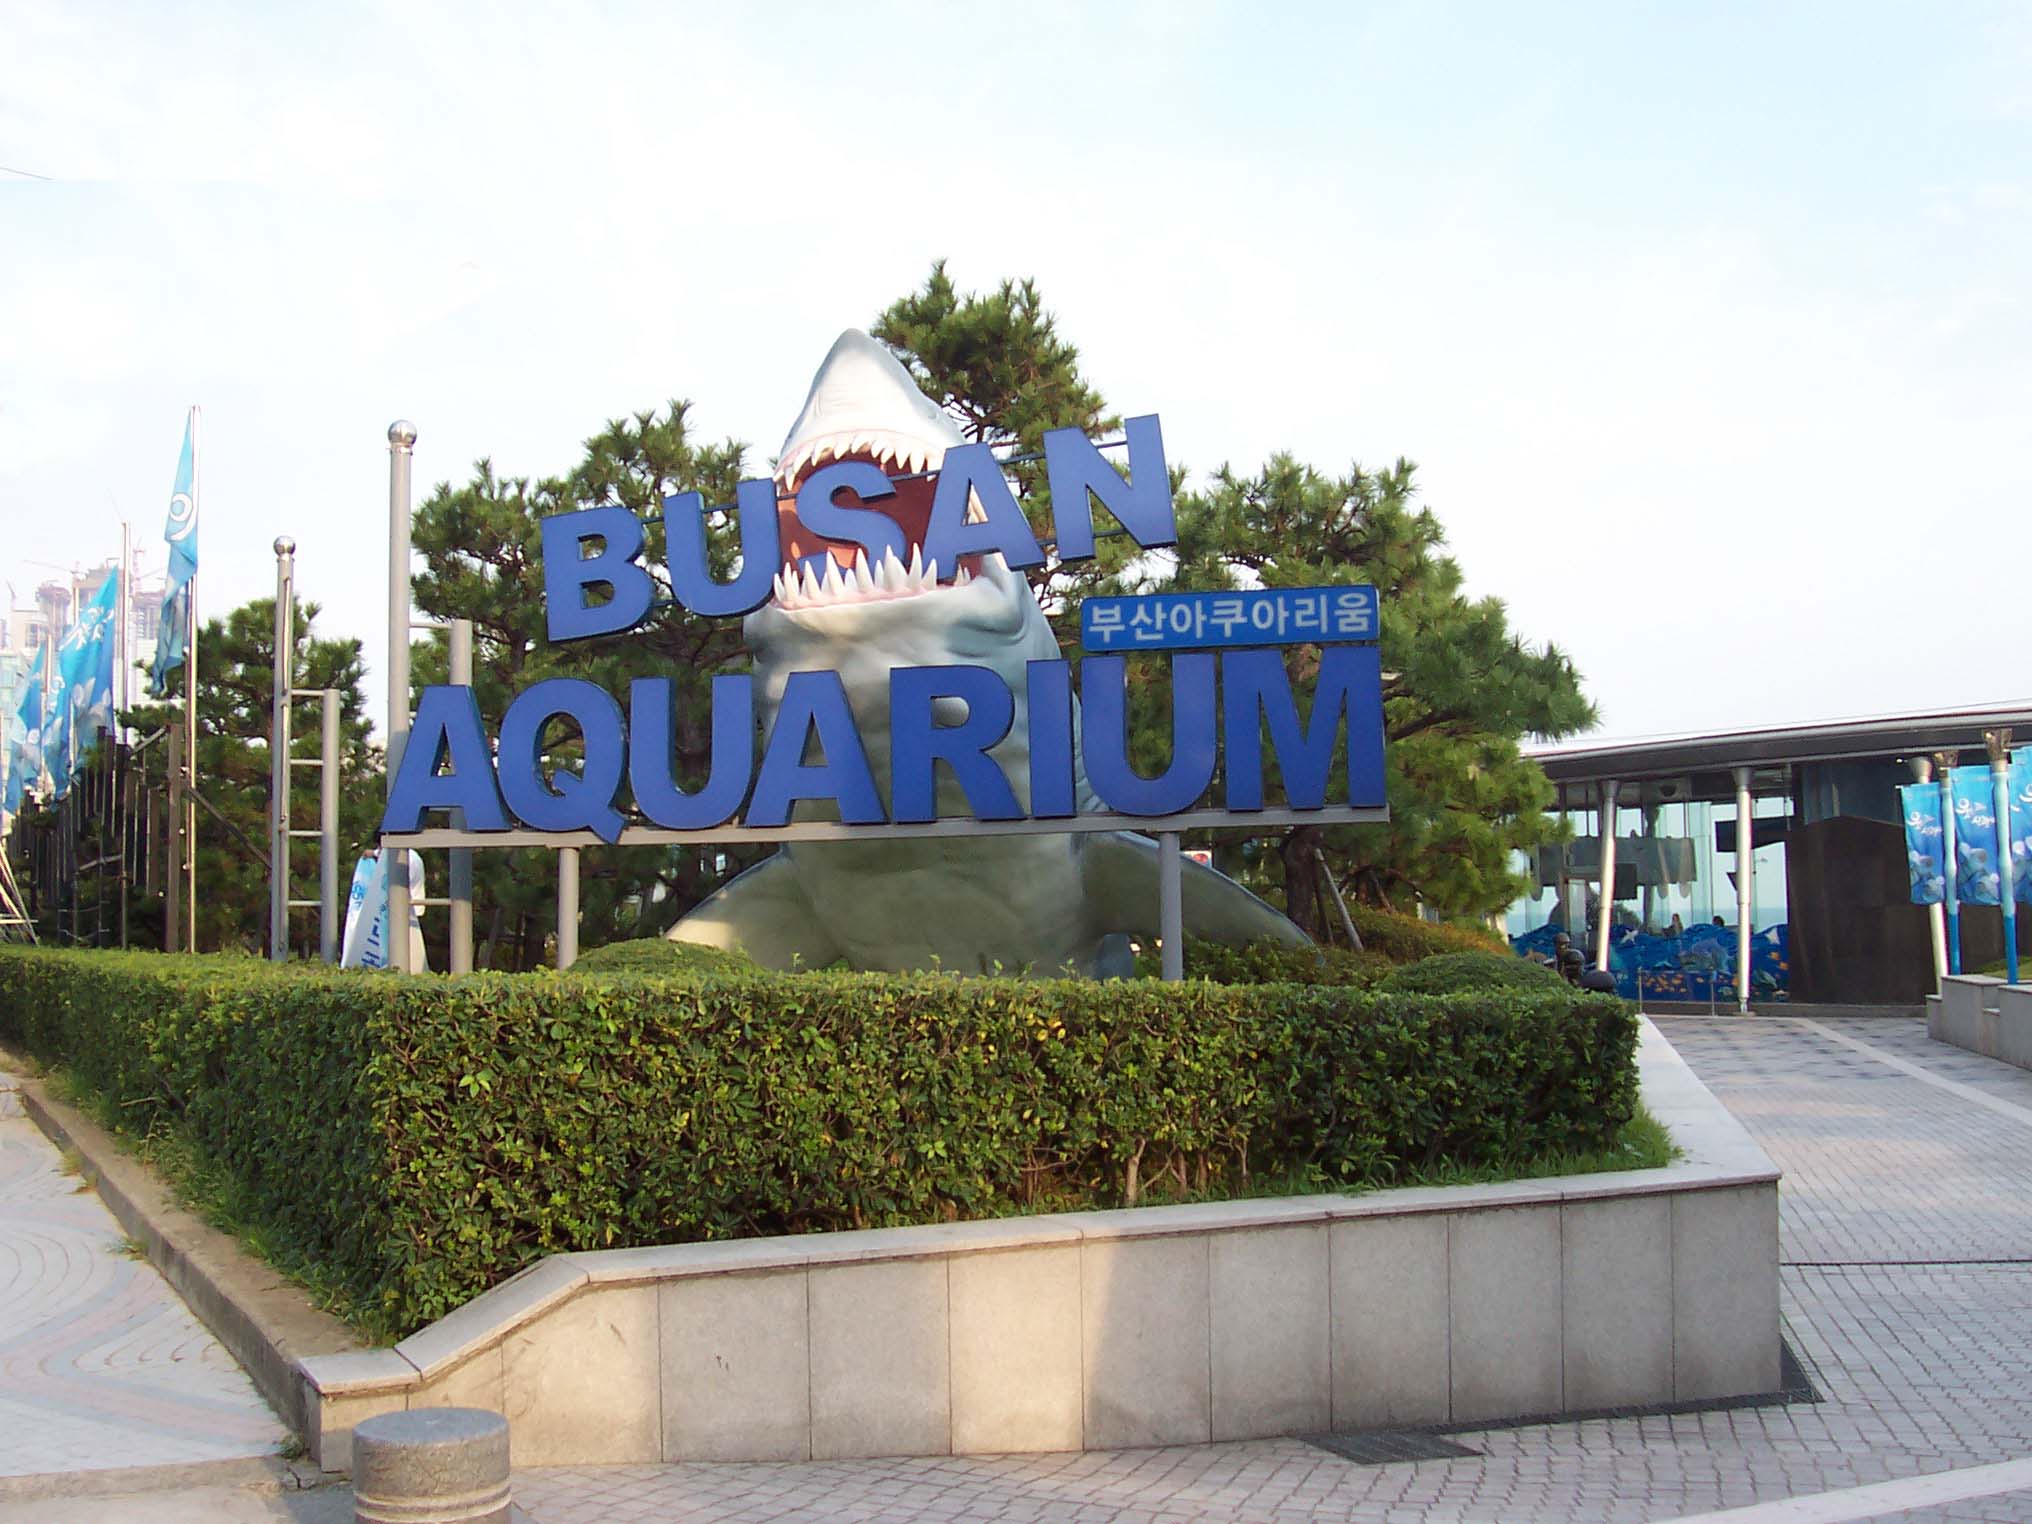 20-astonishing-facts-about-busan-aquarium